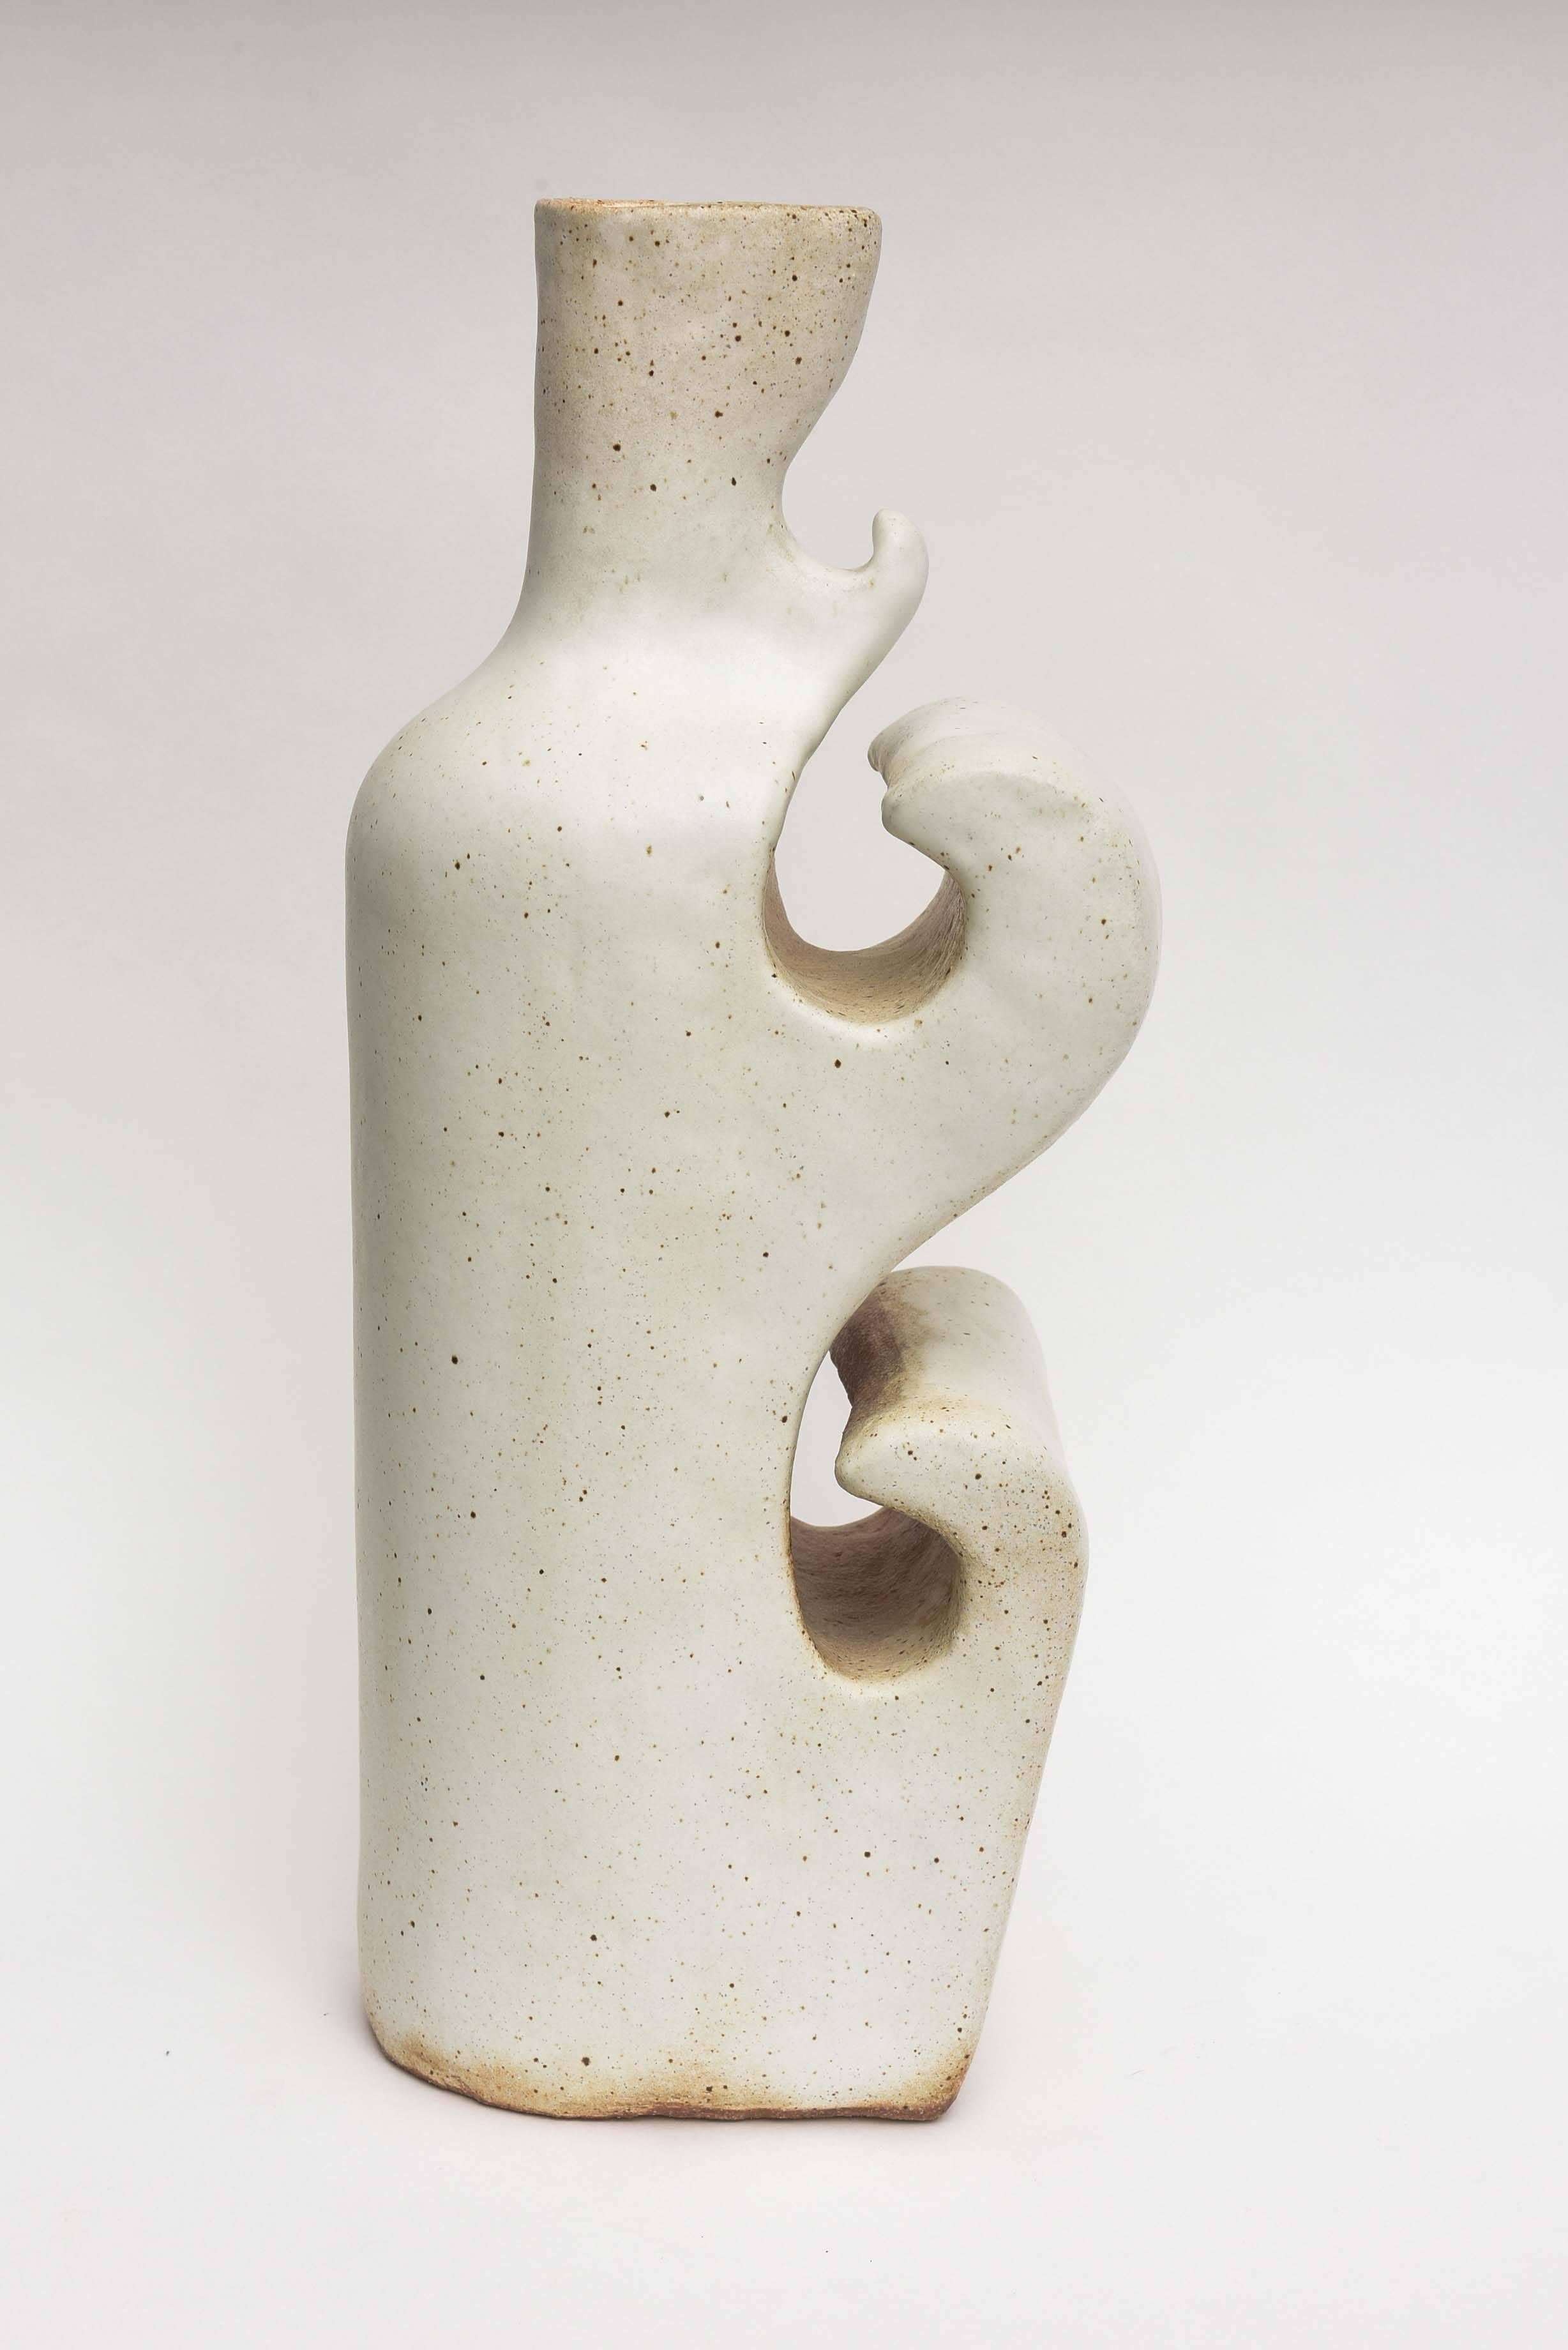 Ceramic vase of sculptural form by renowned California artist Daric Harvie.